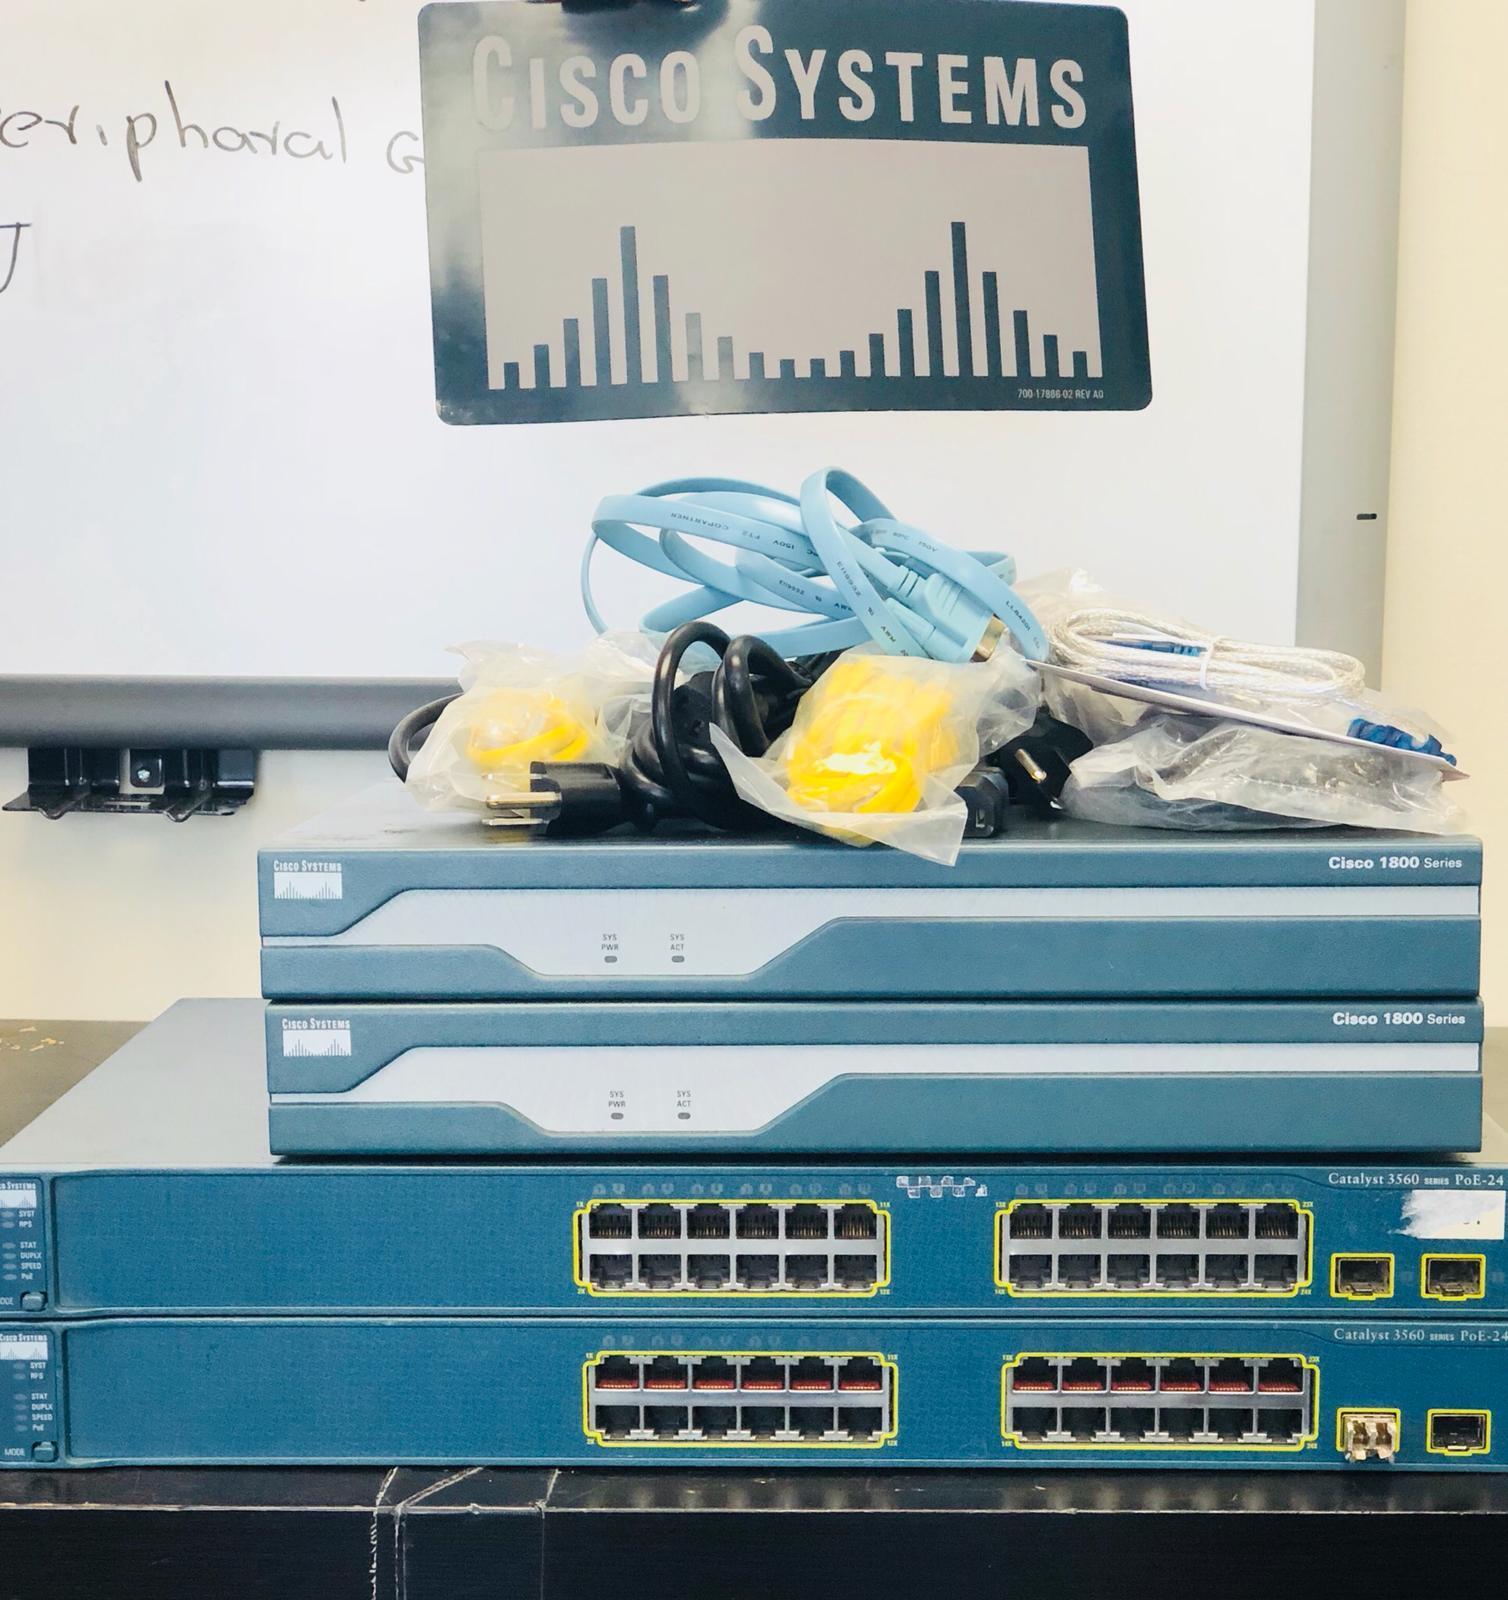 Advanced Cisco CCNA V3 and CCNP home lab kit 